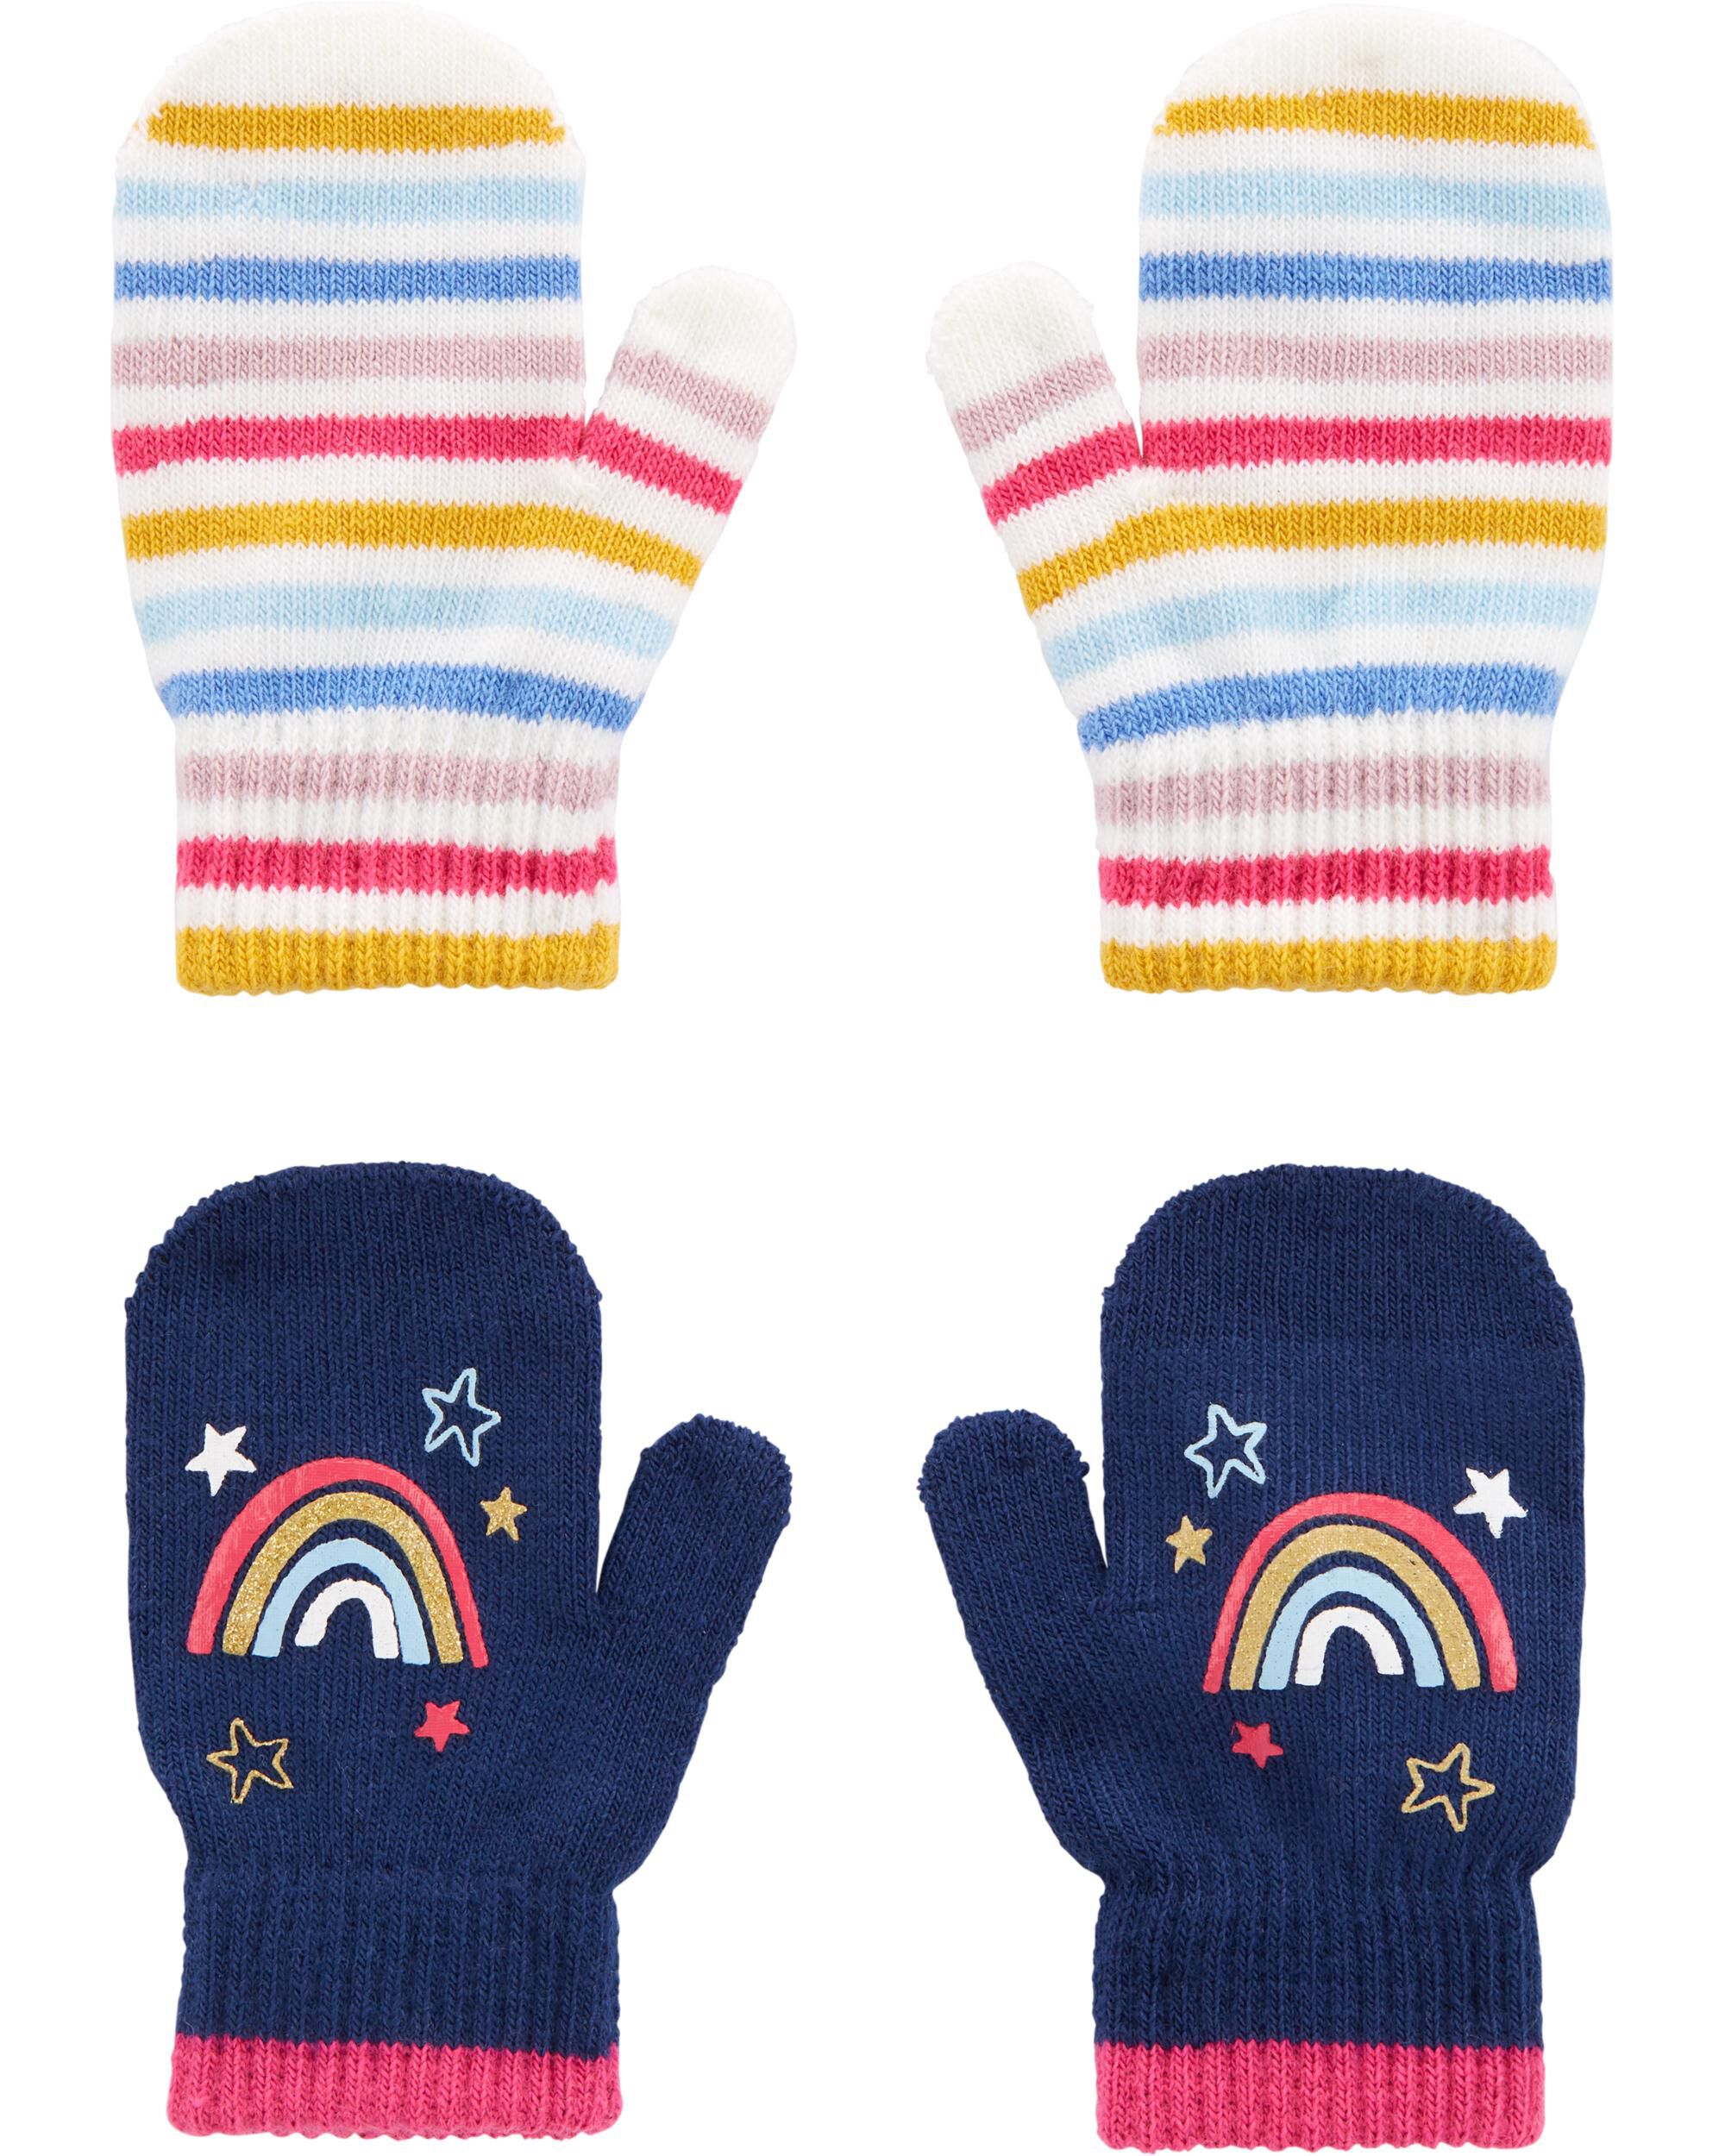 toddler mittens